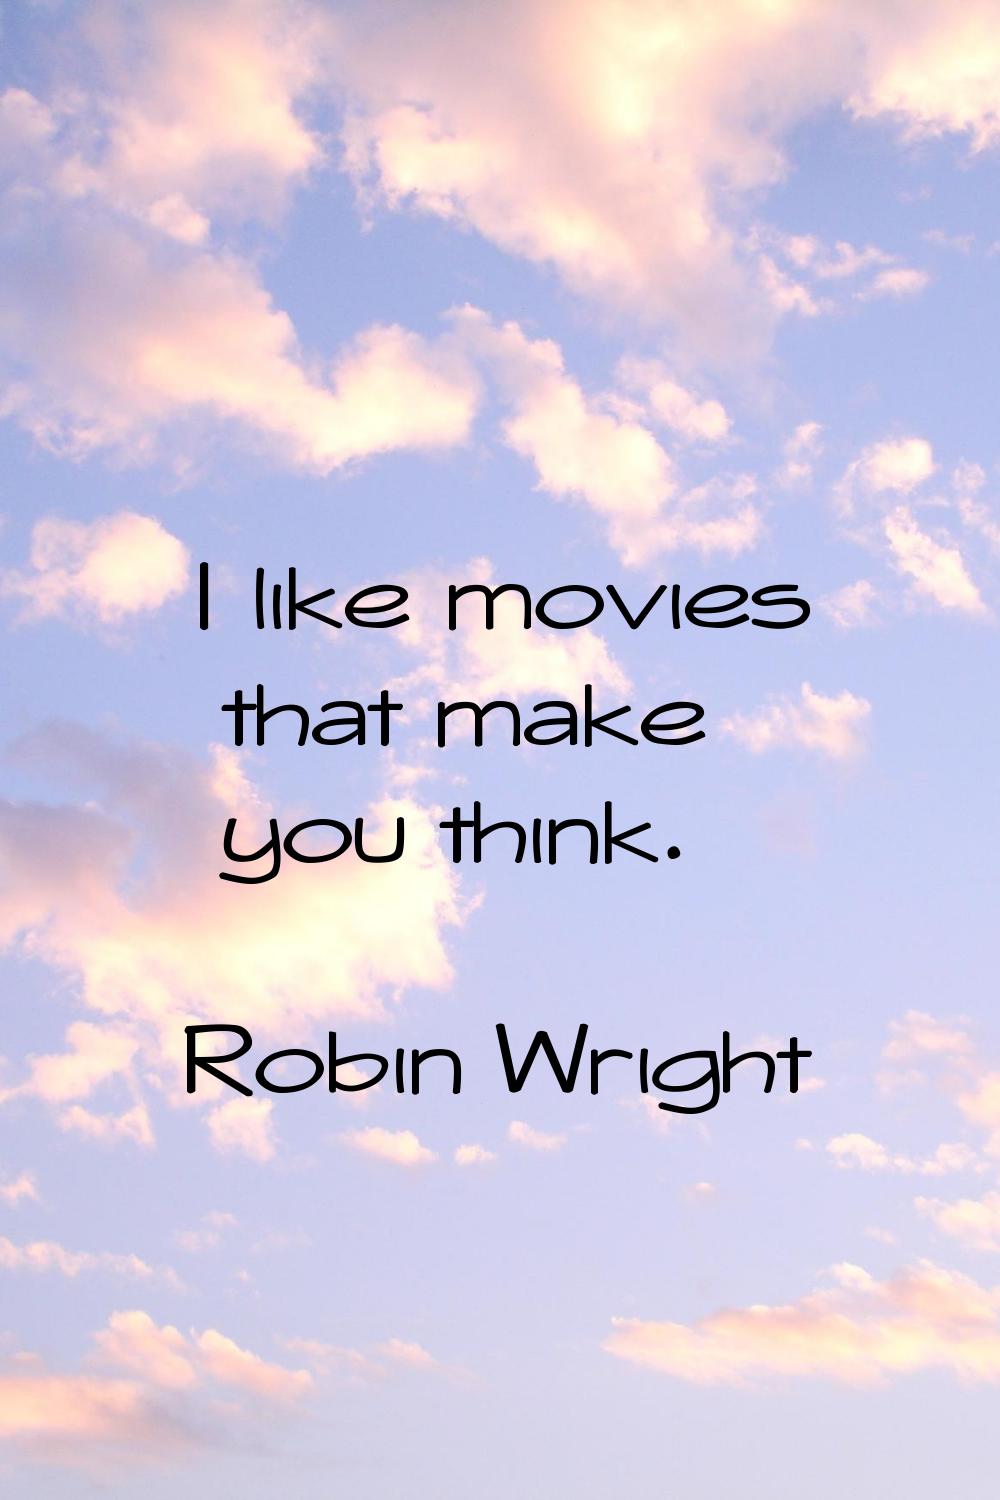 I like movies that make you think.